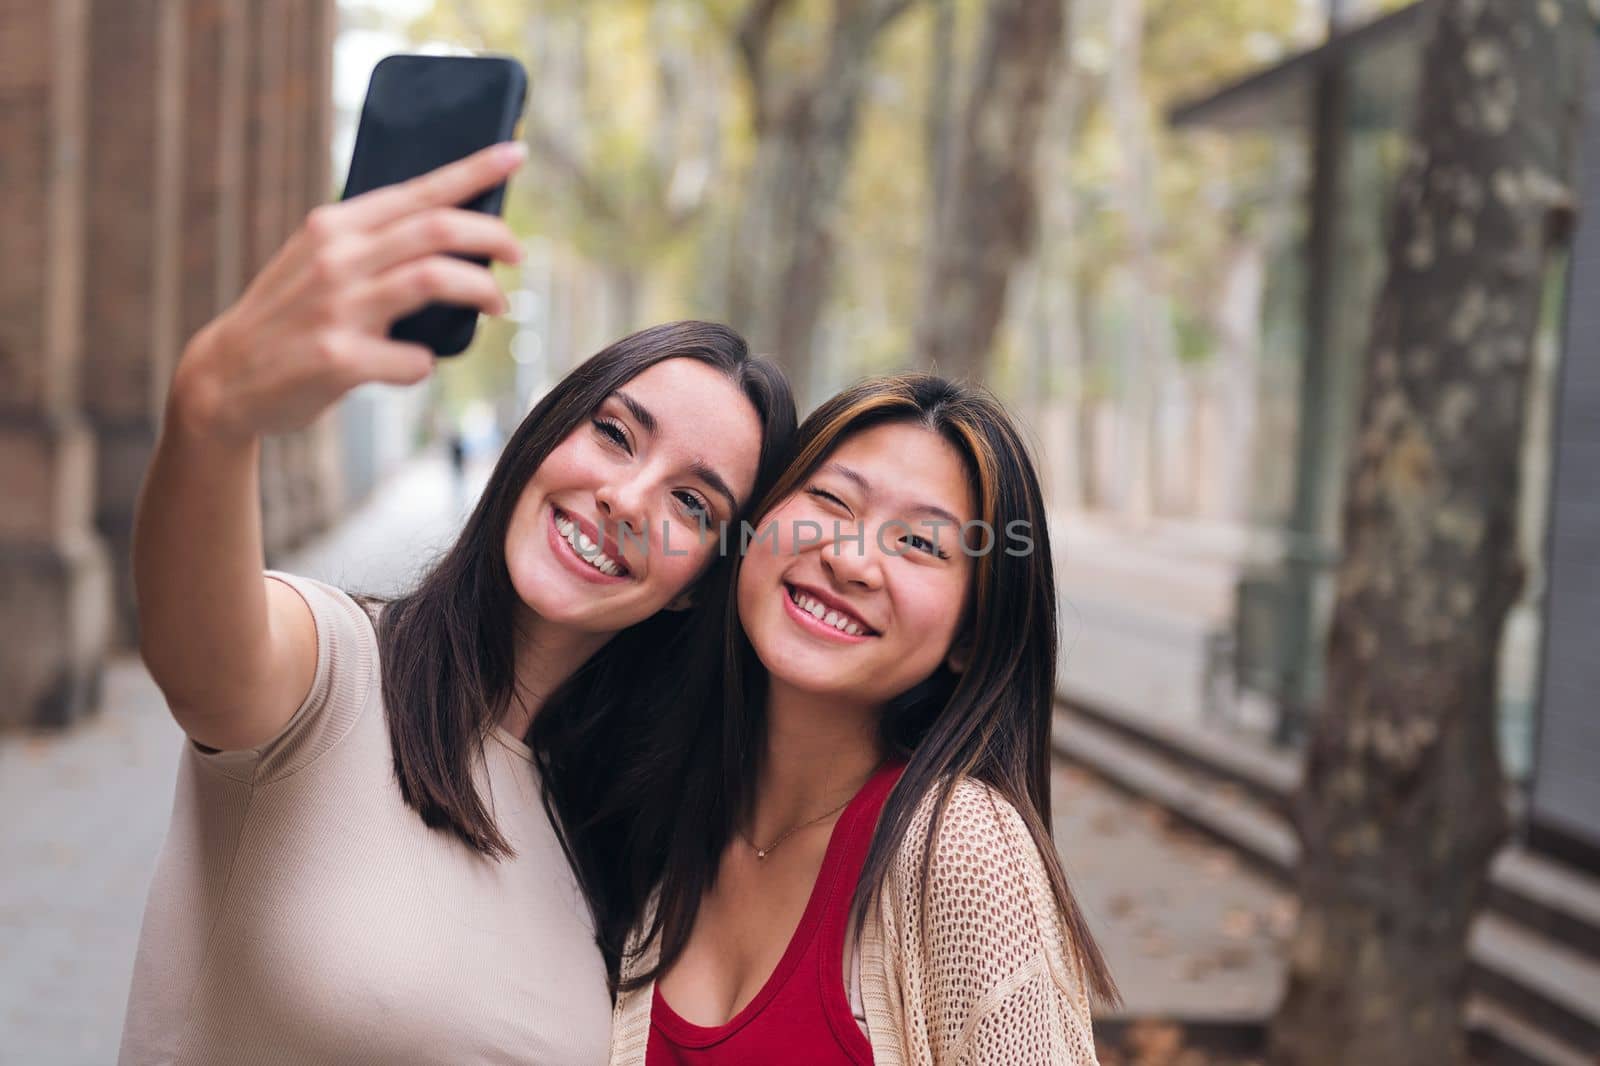 women smiling and having fun taking a selfie by raulmelldo